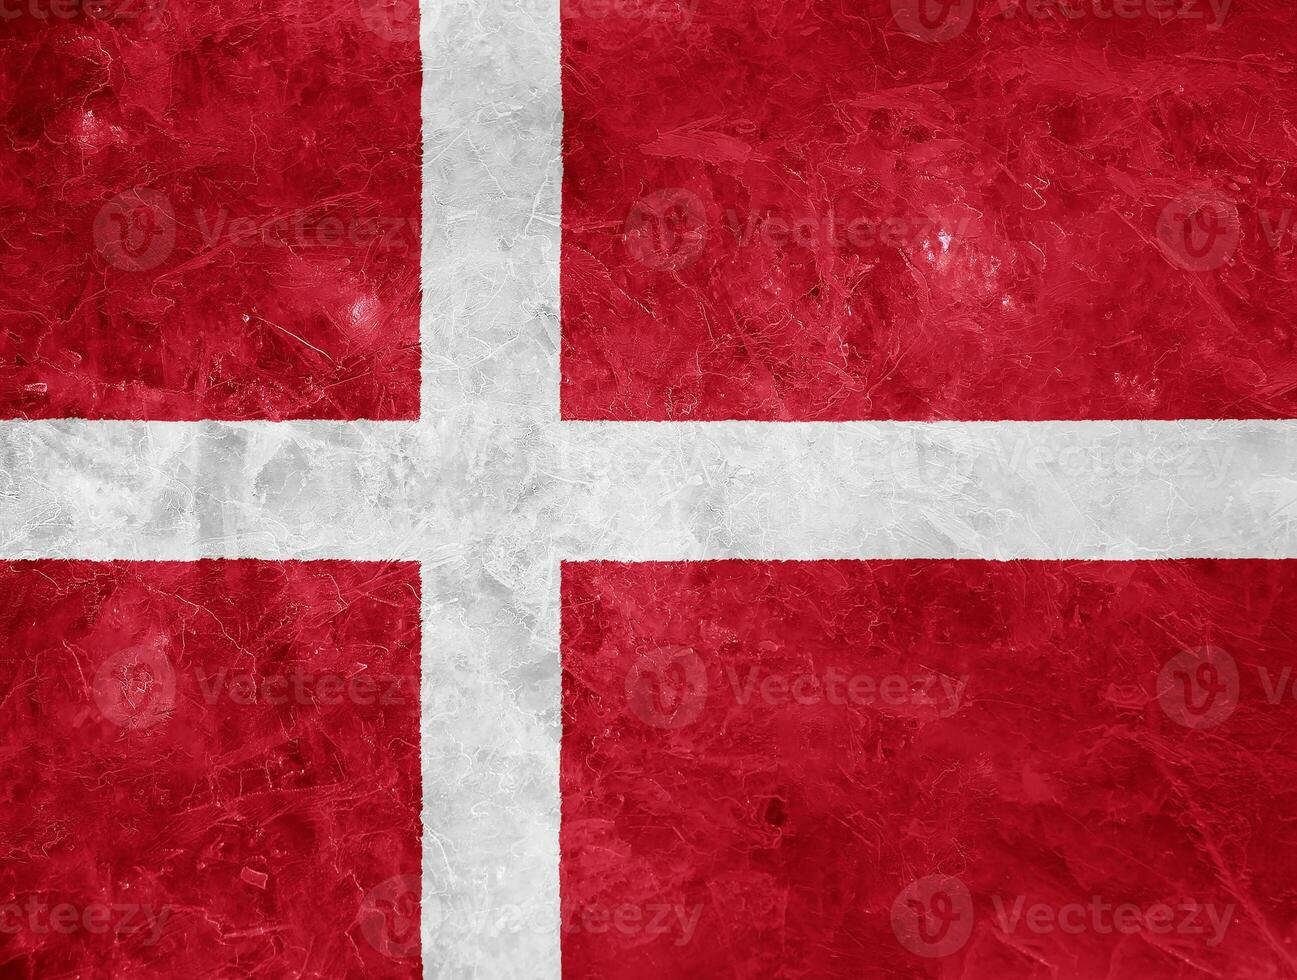 flagga av Danmark på en texturerad bakgrund. begrepp collage. foto